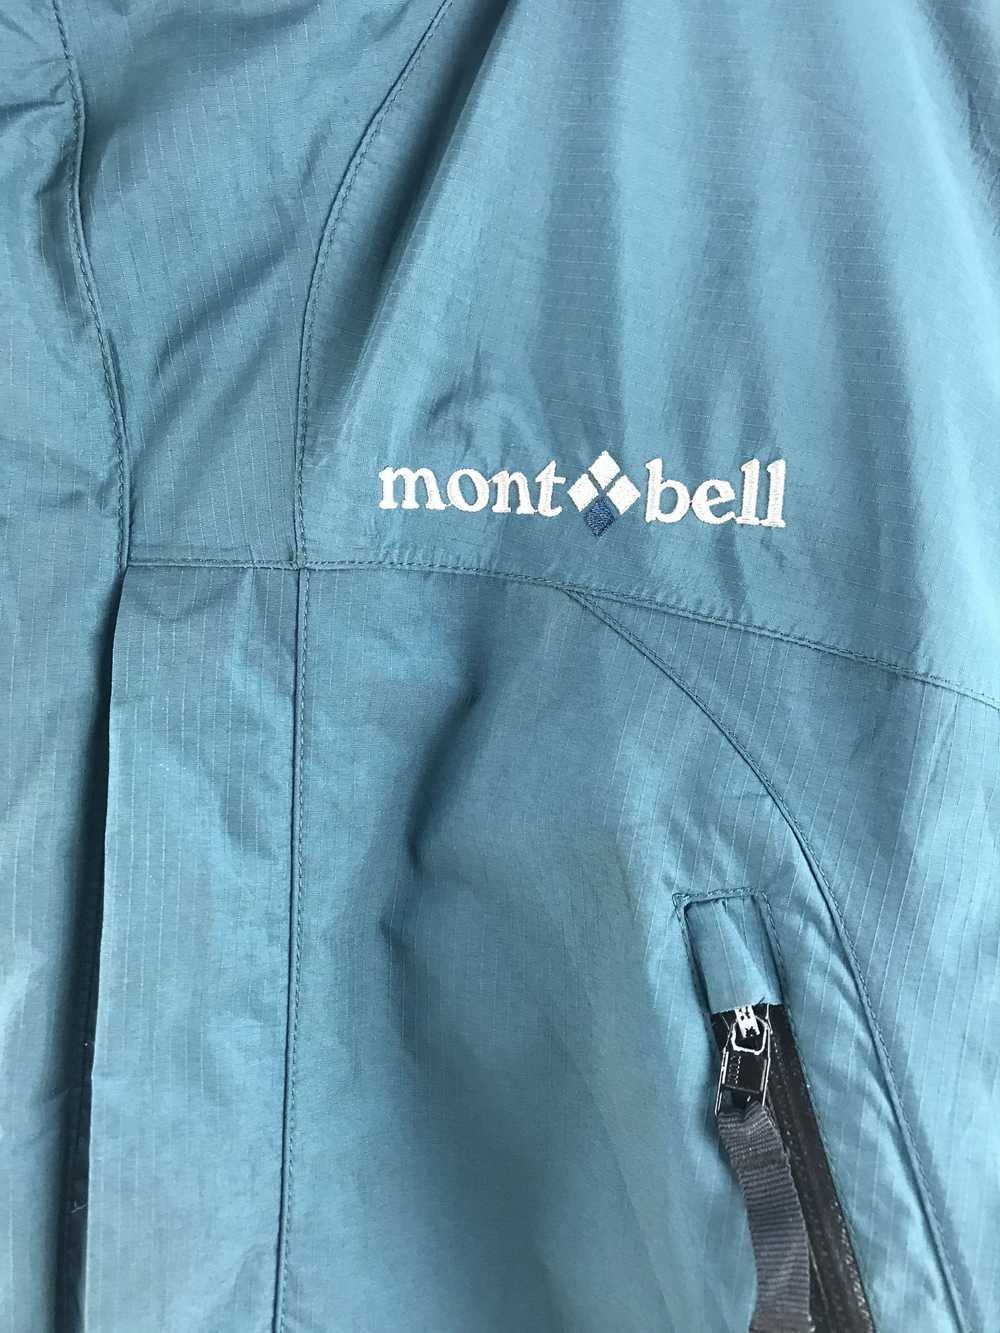 Montbell Vintage Montbell Jacket - image 8